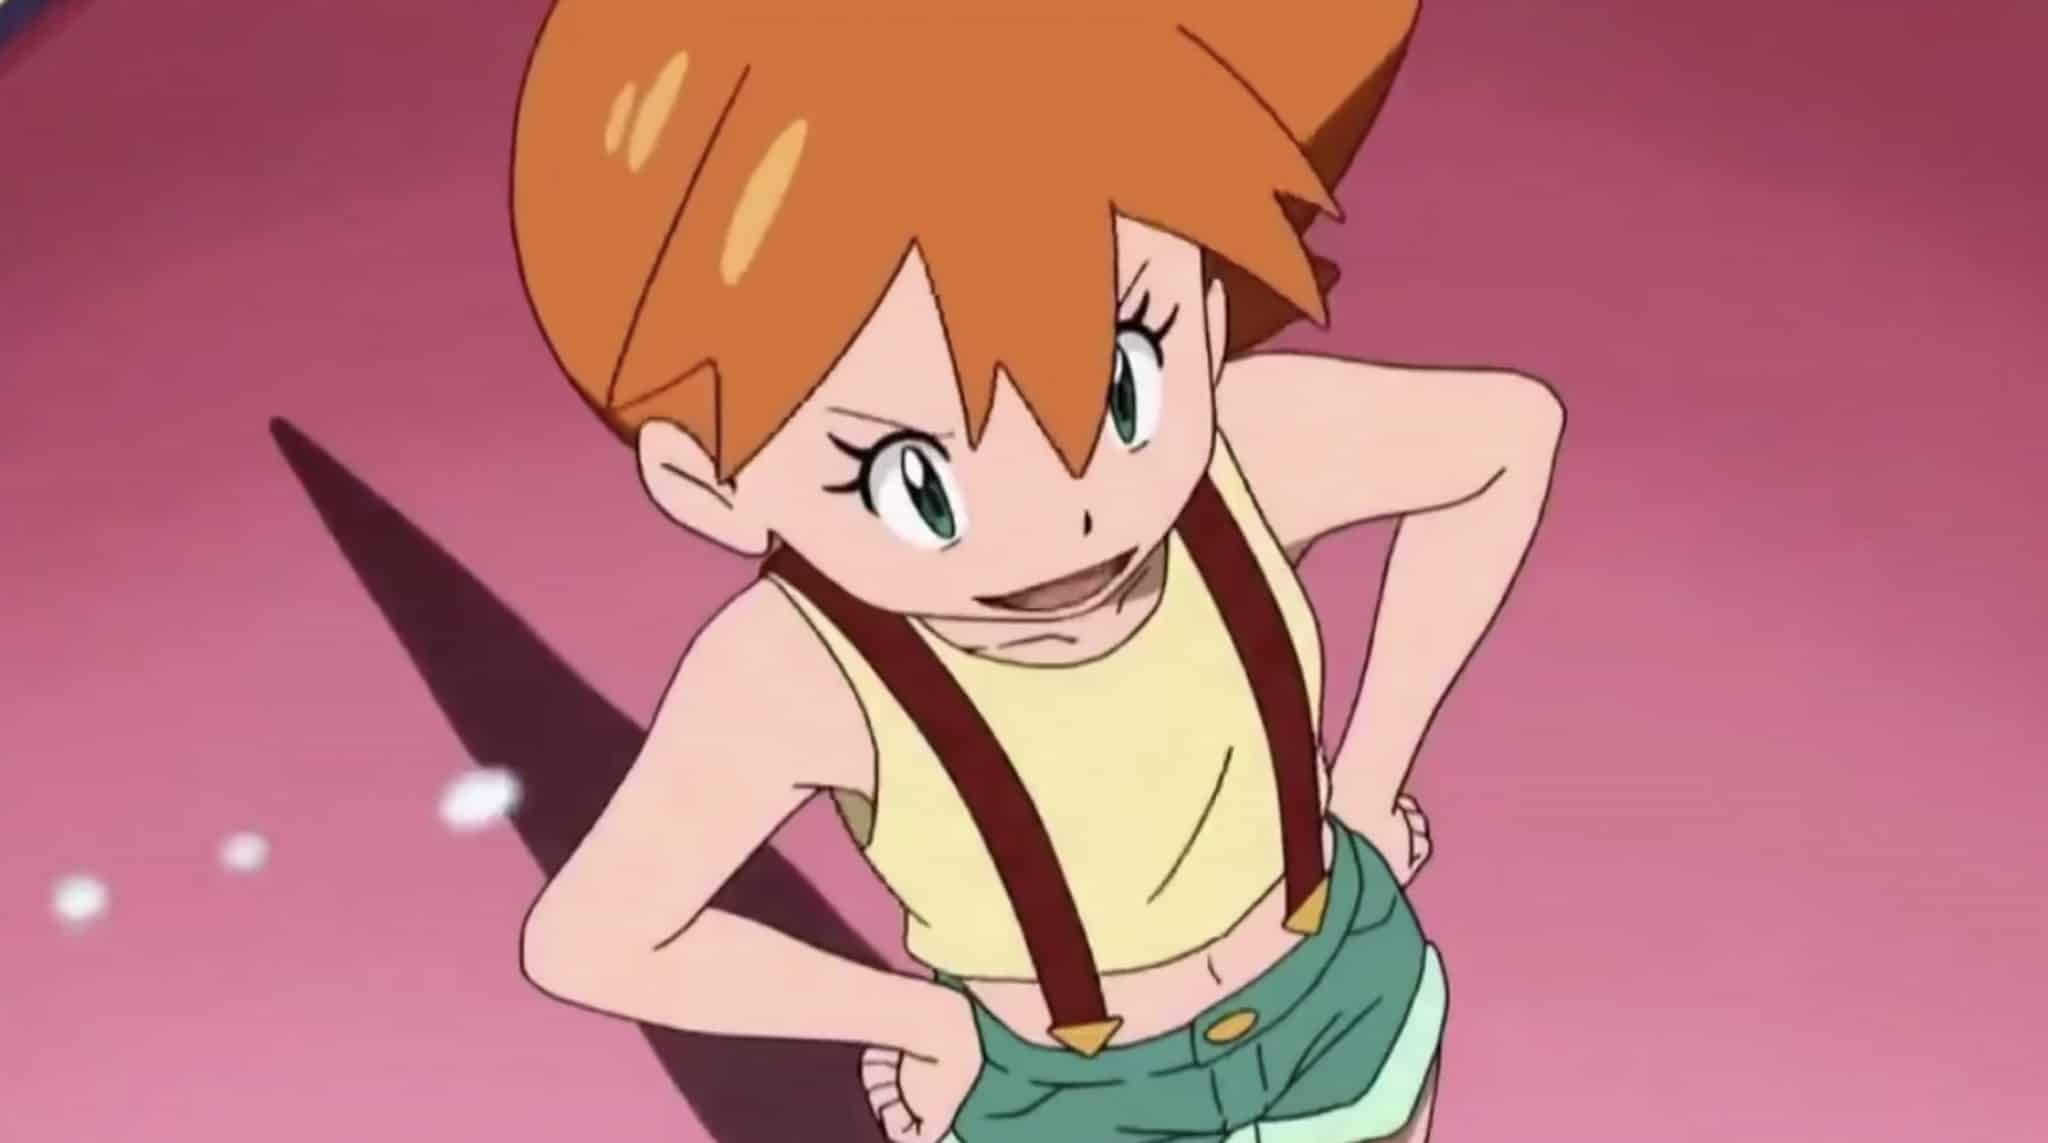 Screenshot of Misty from Pokemon Sun and Moon anime.